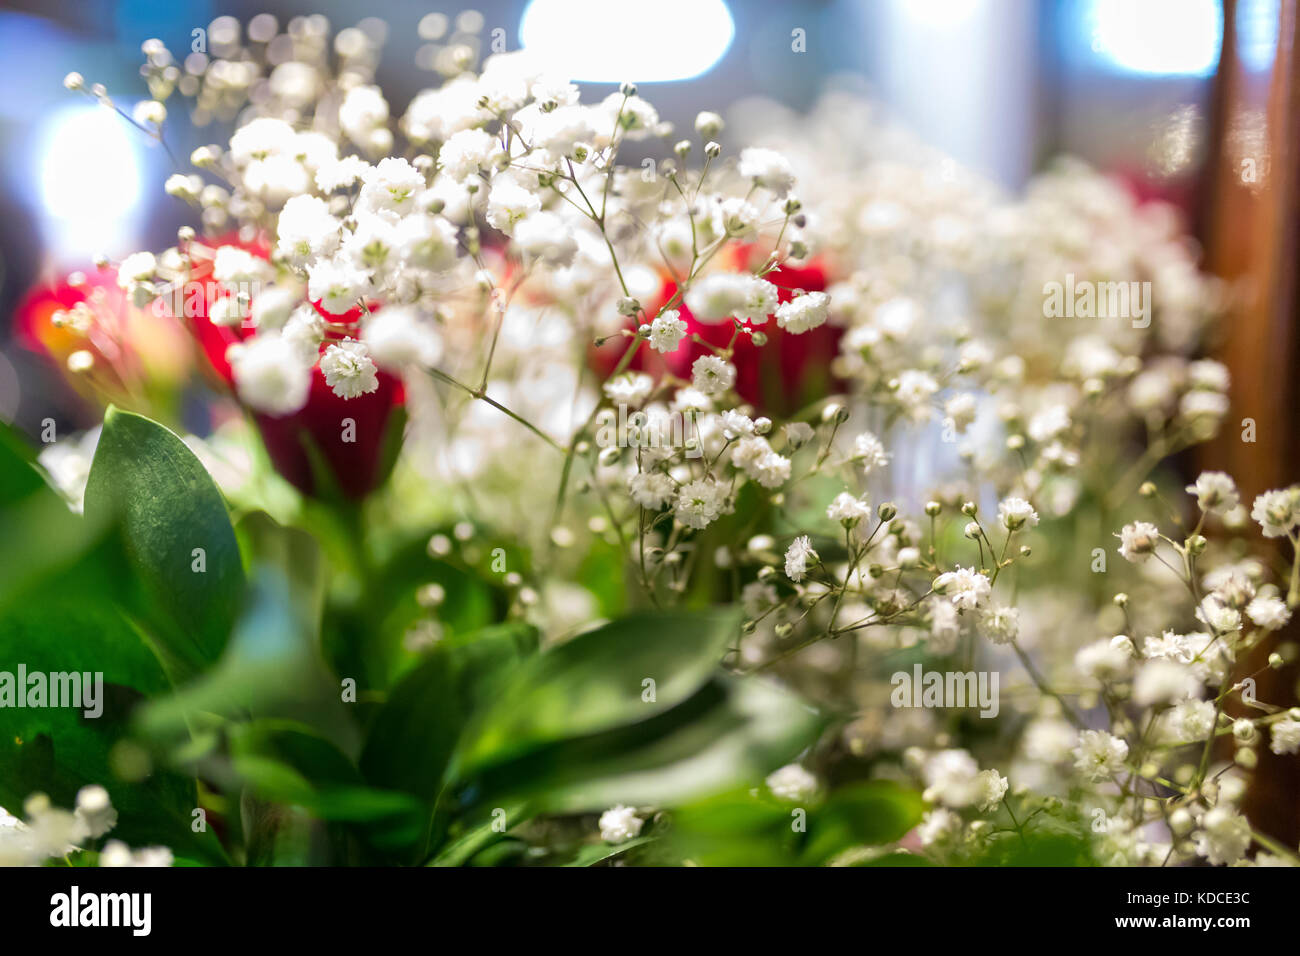 White gypsophila babies breath Bristol Fairy flowers close up in a wedding bouquet Stock Photo